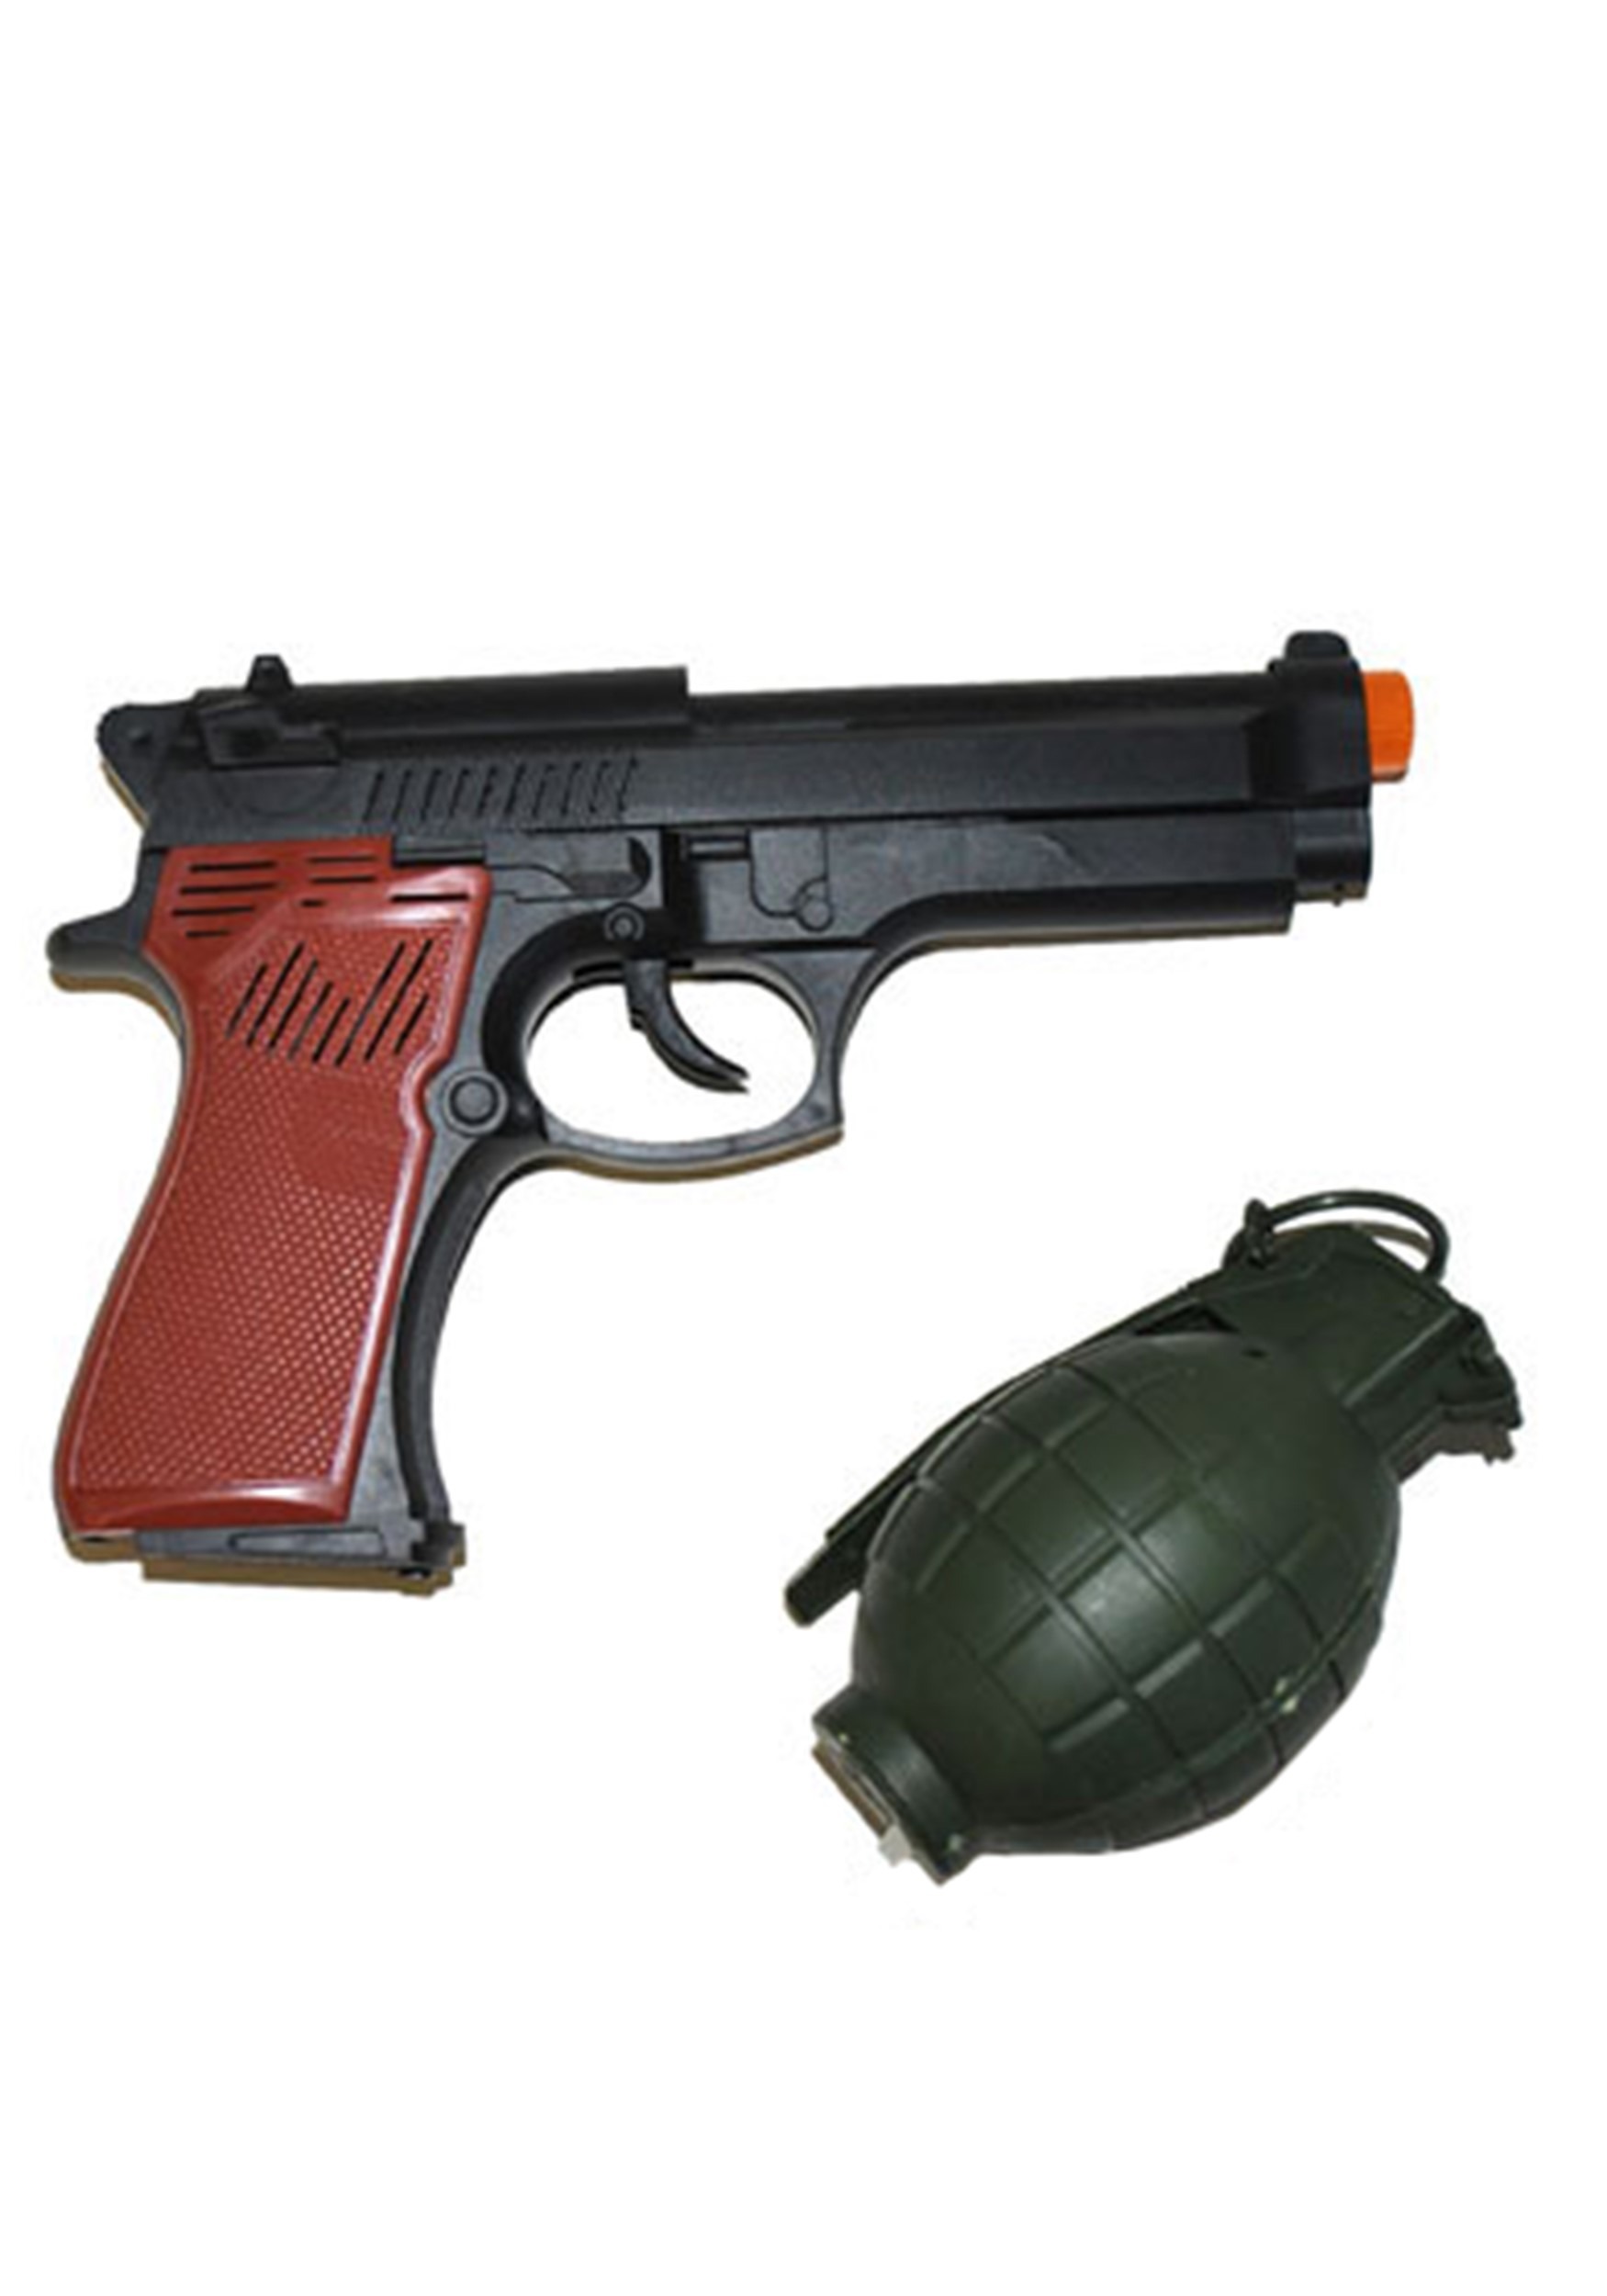 The Gun and Grenade Set